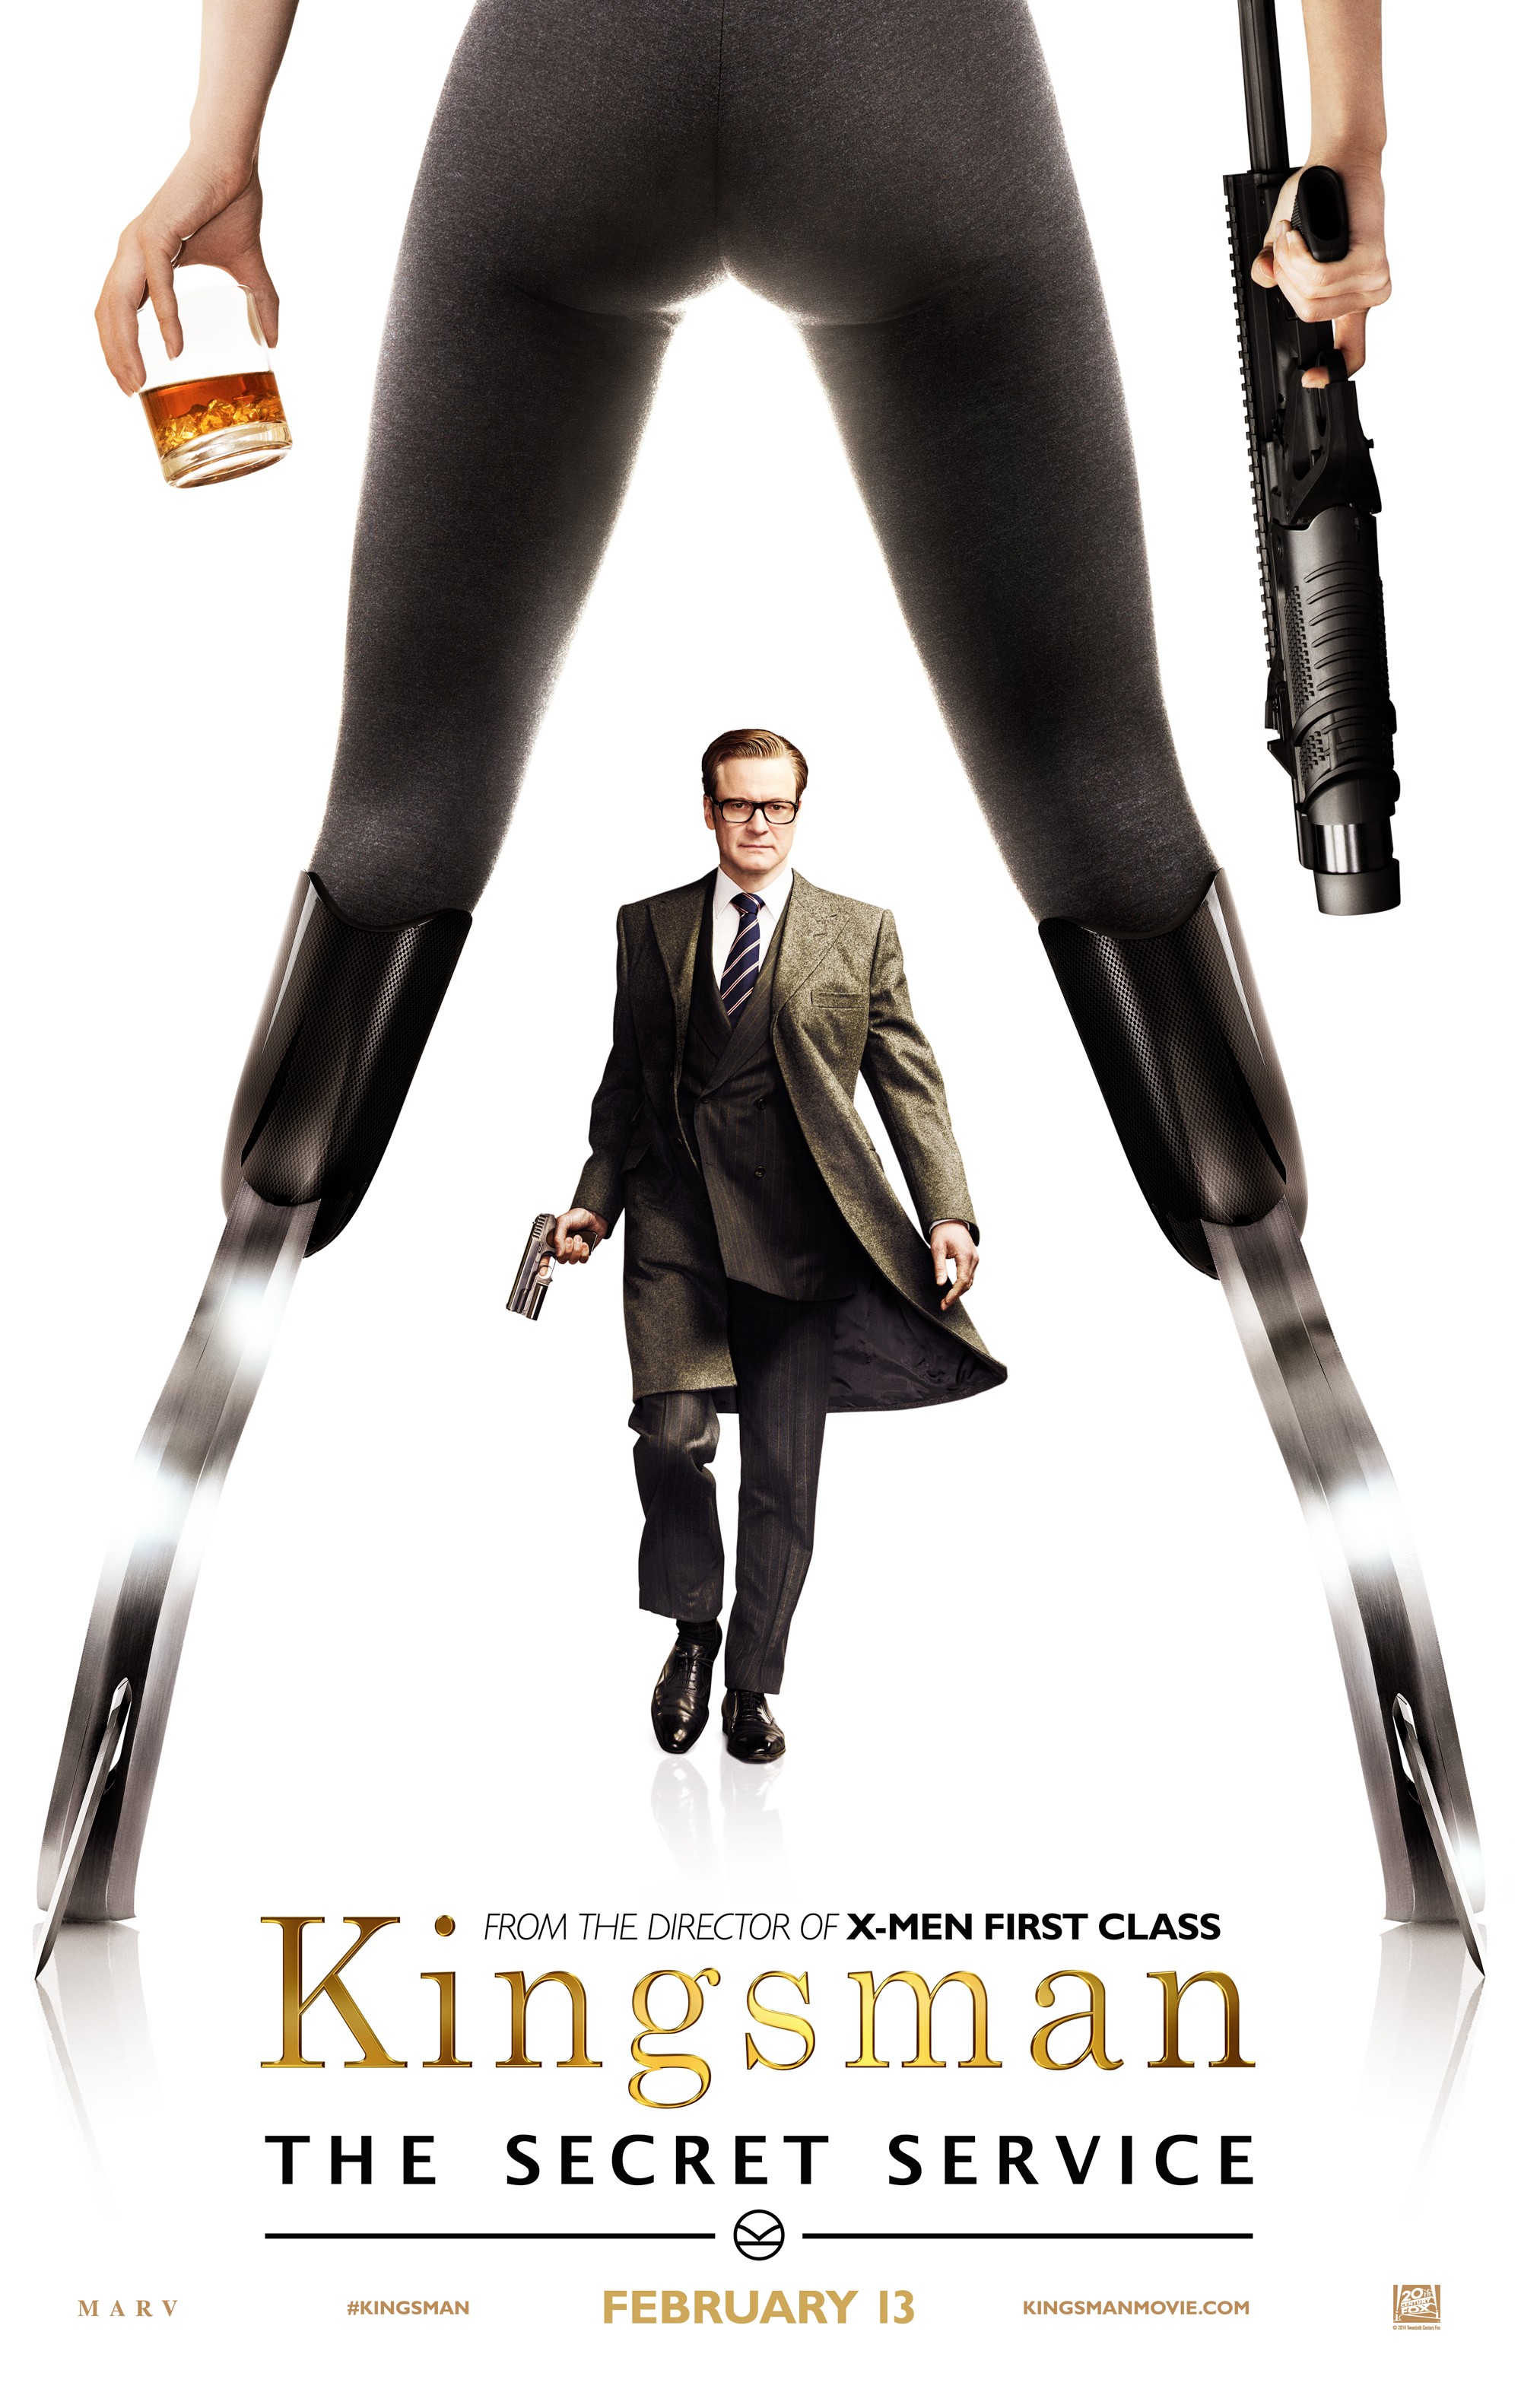 Kingsman: The Secret Service - Movie - Where To Watch